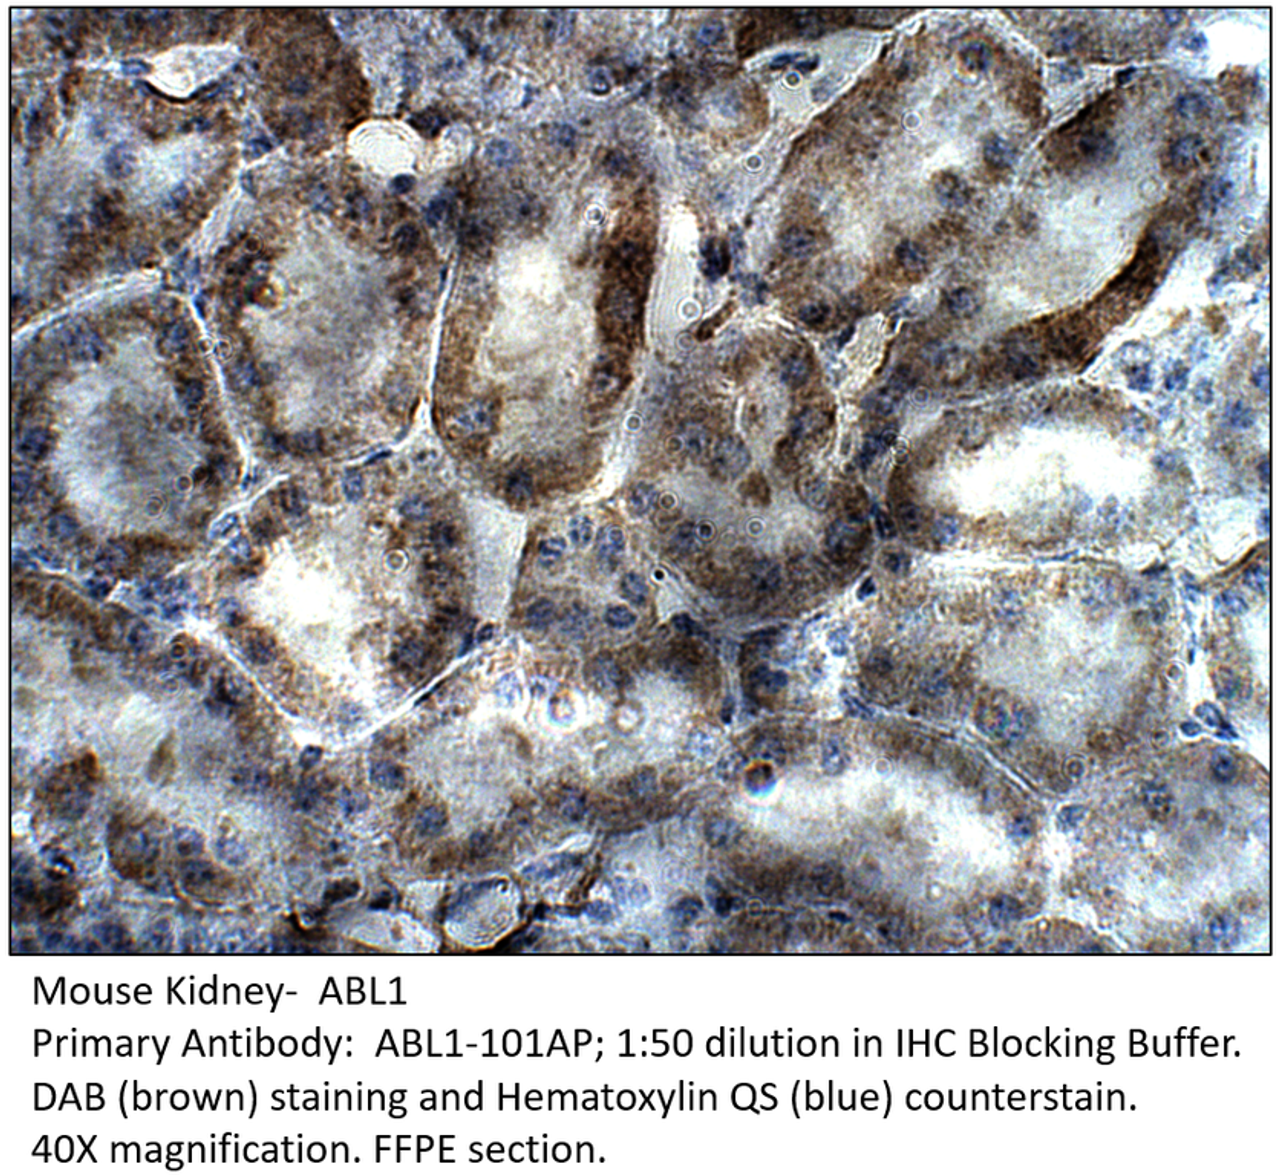 ABL1 Antibody from Fabgennix